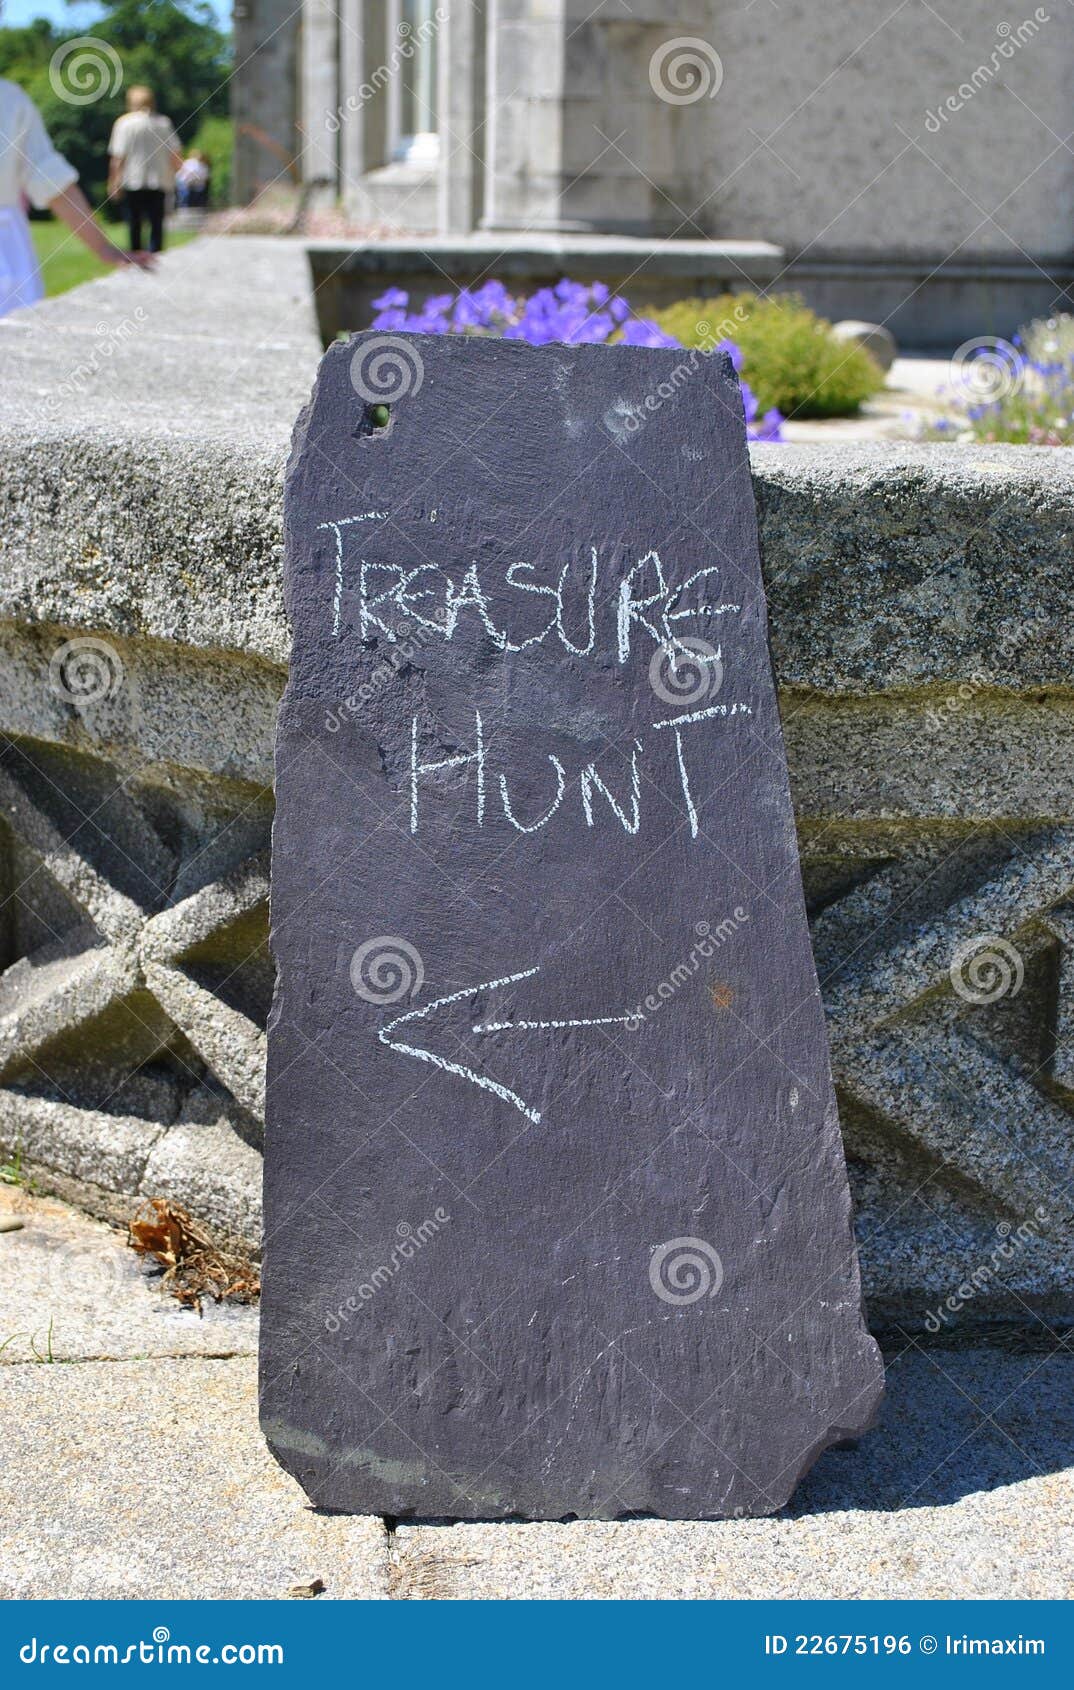 treasure hunt sign